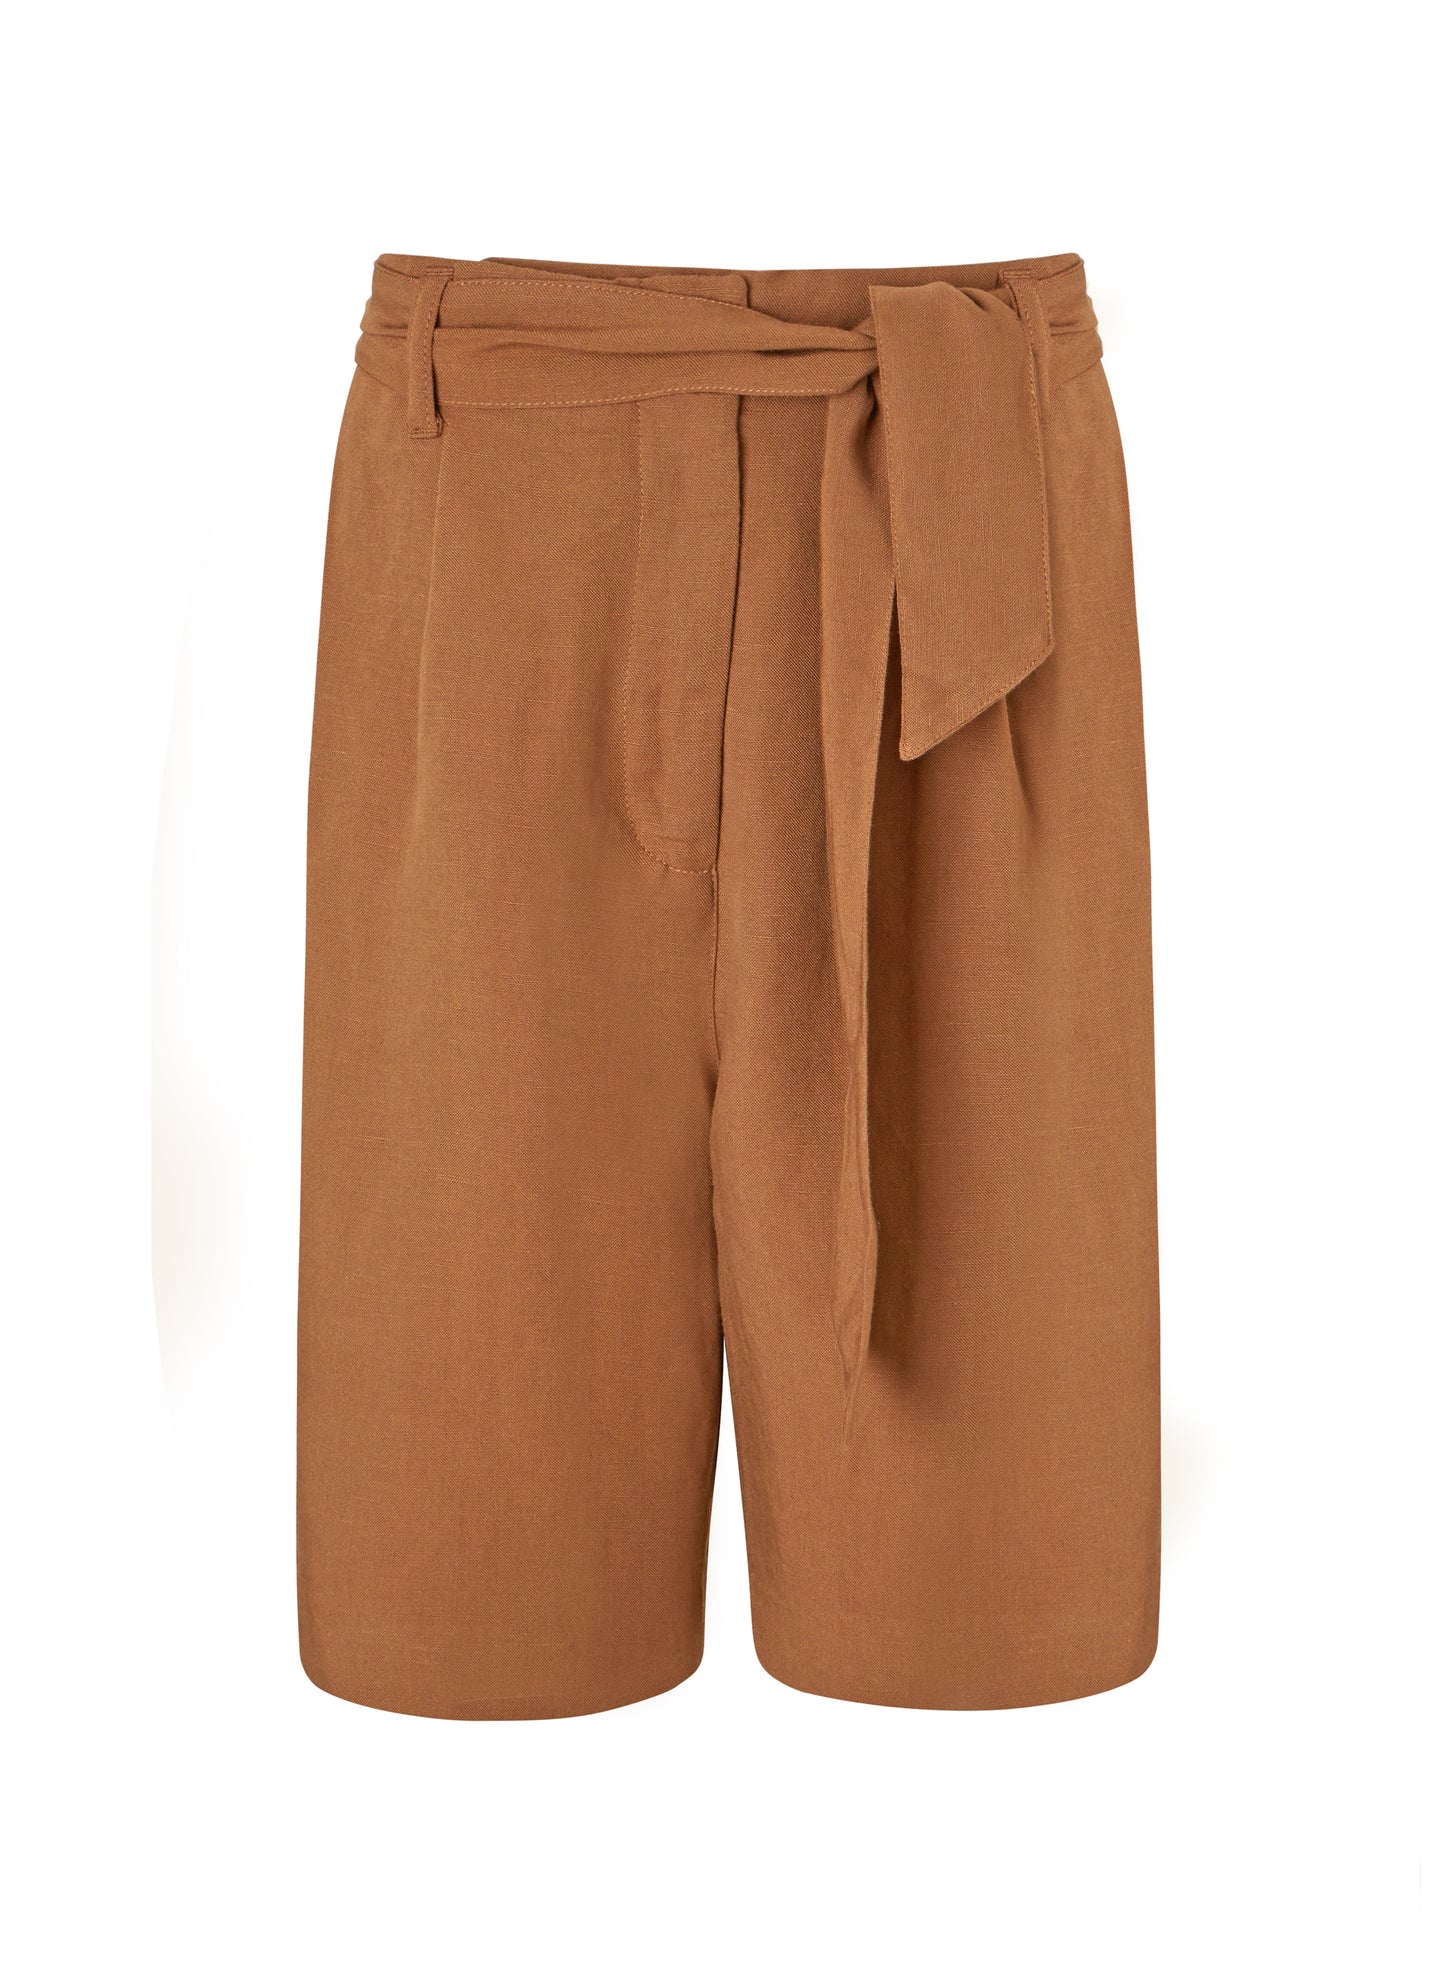 Pre-Loved Cooper Linen Blend Shorts